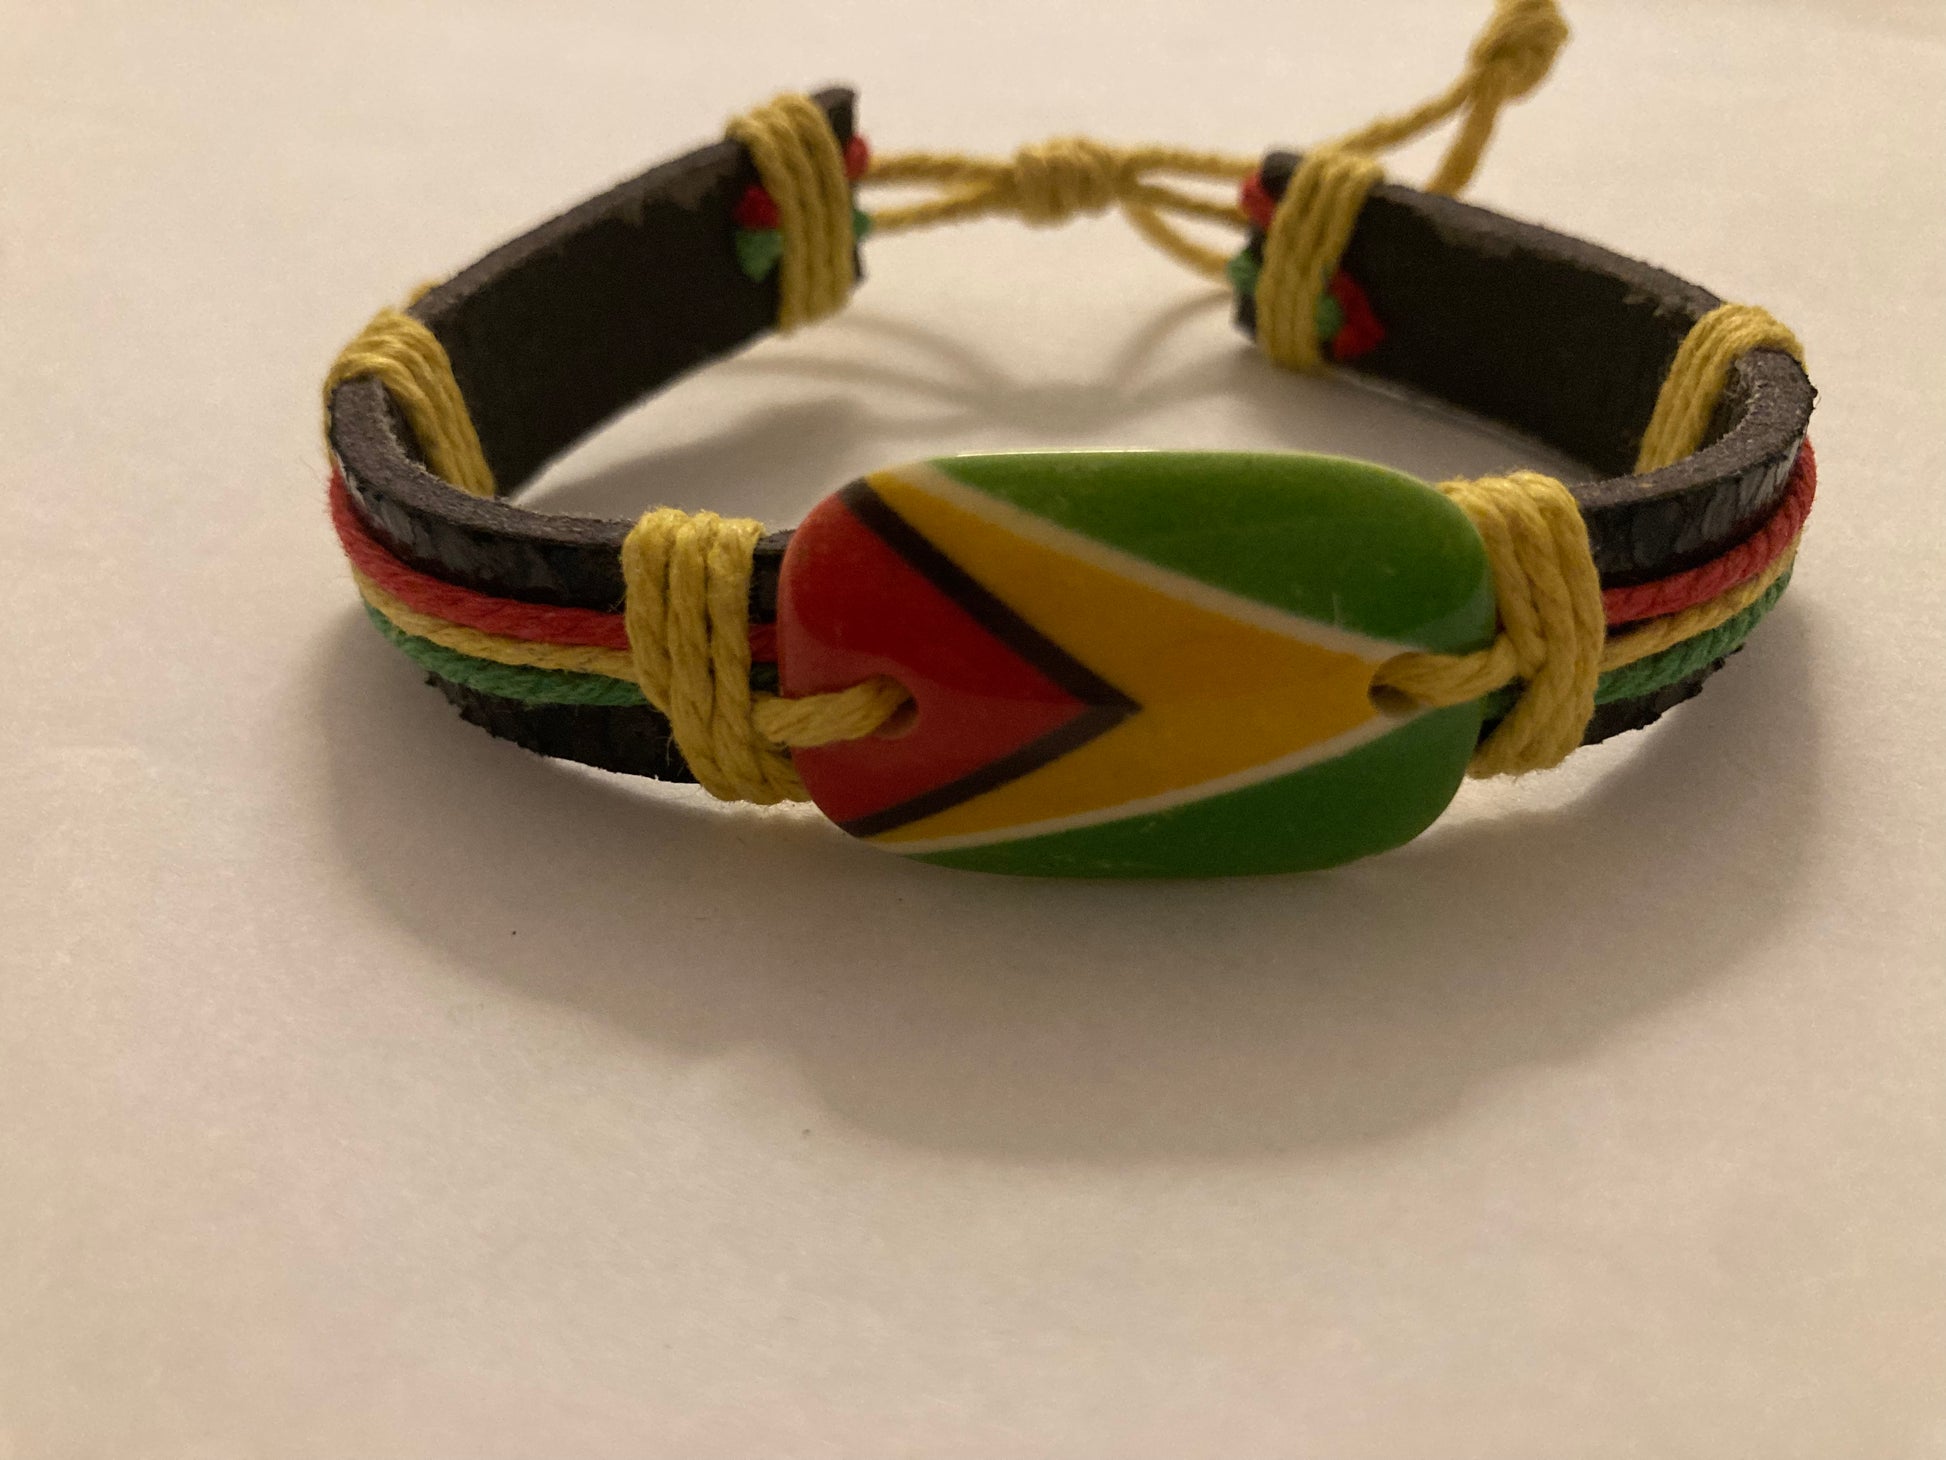 Guyana Flag Leather Draw String Bracelet.